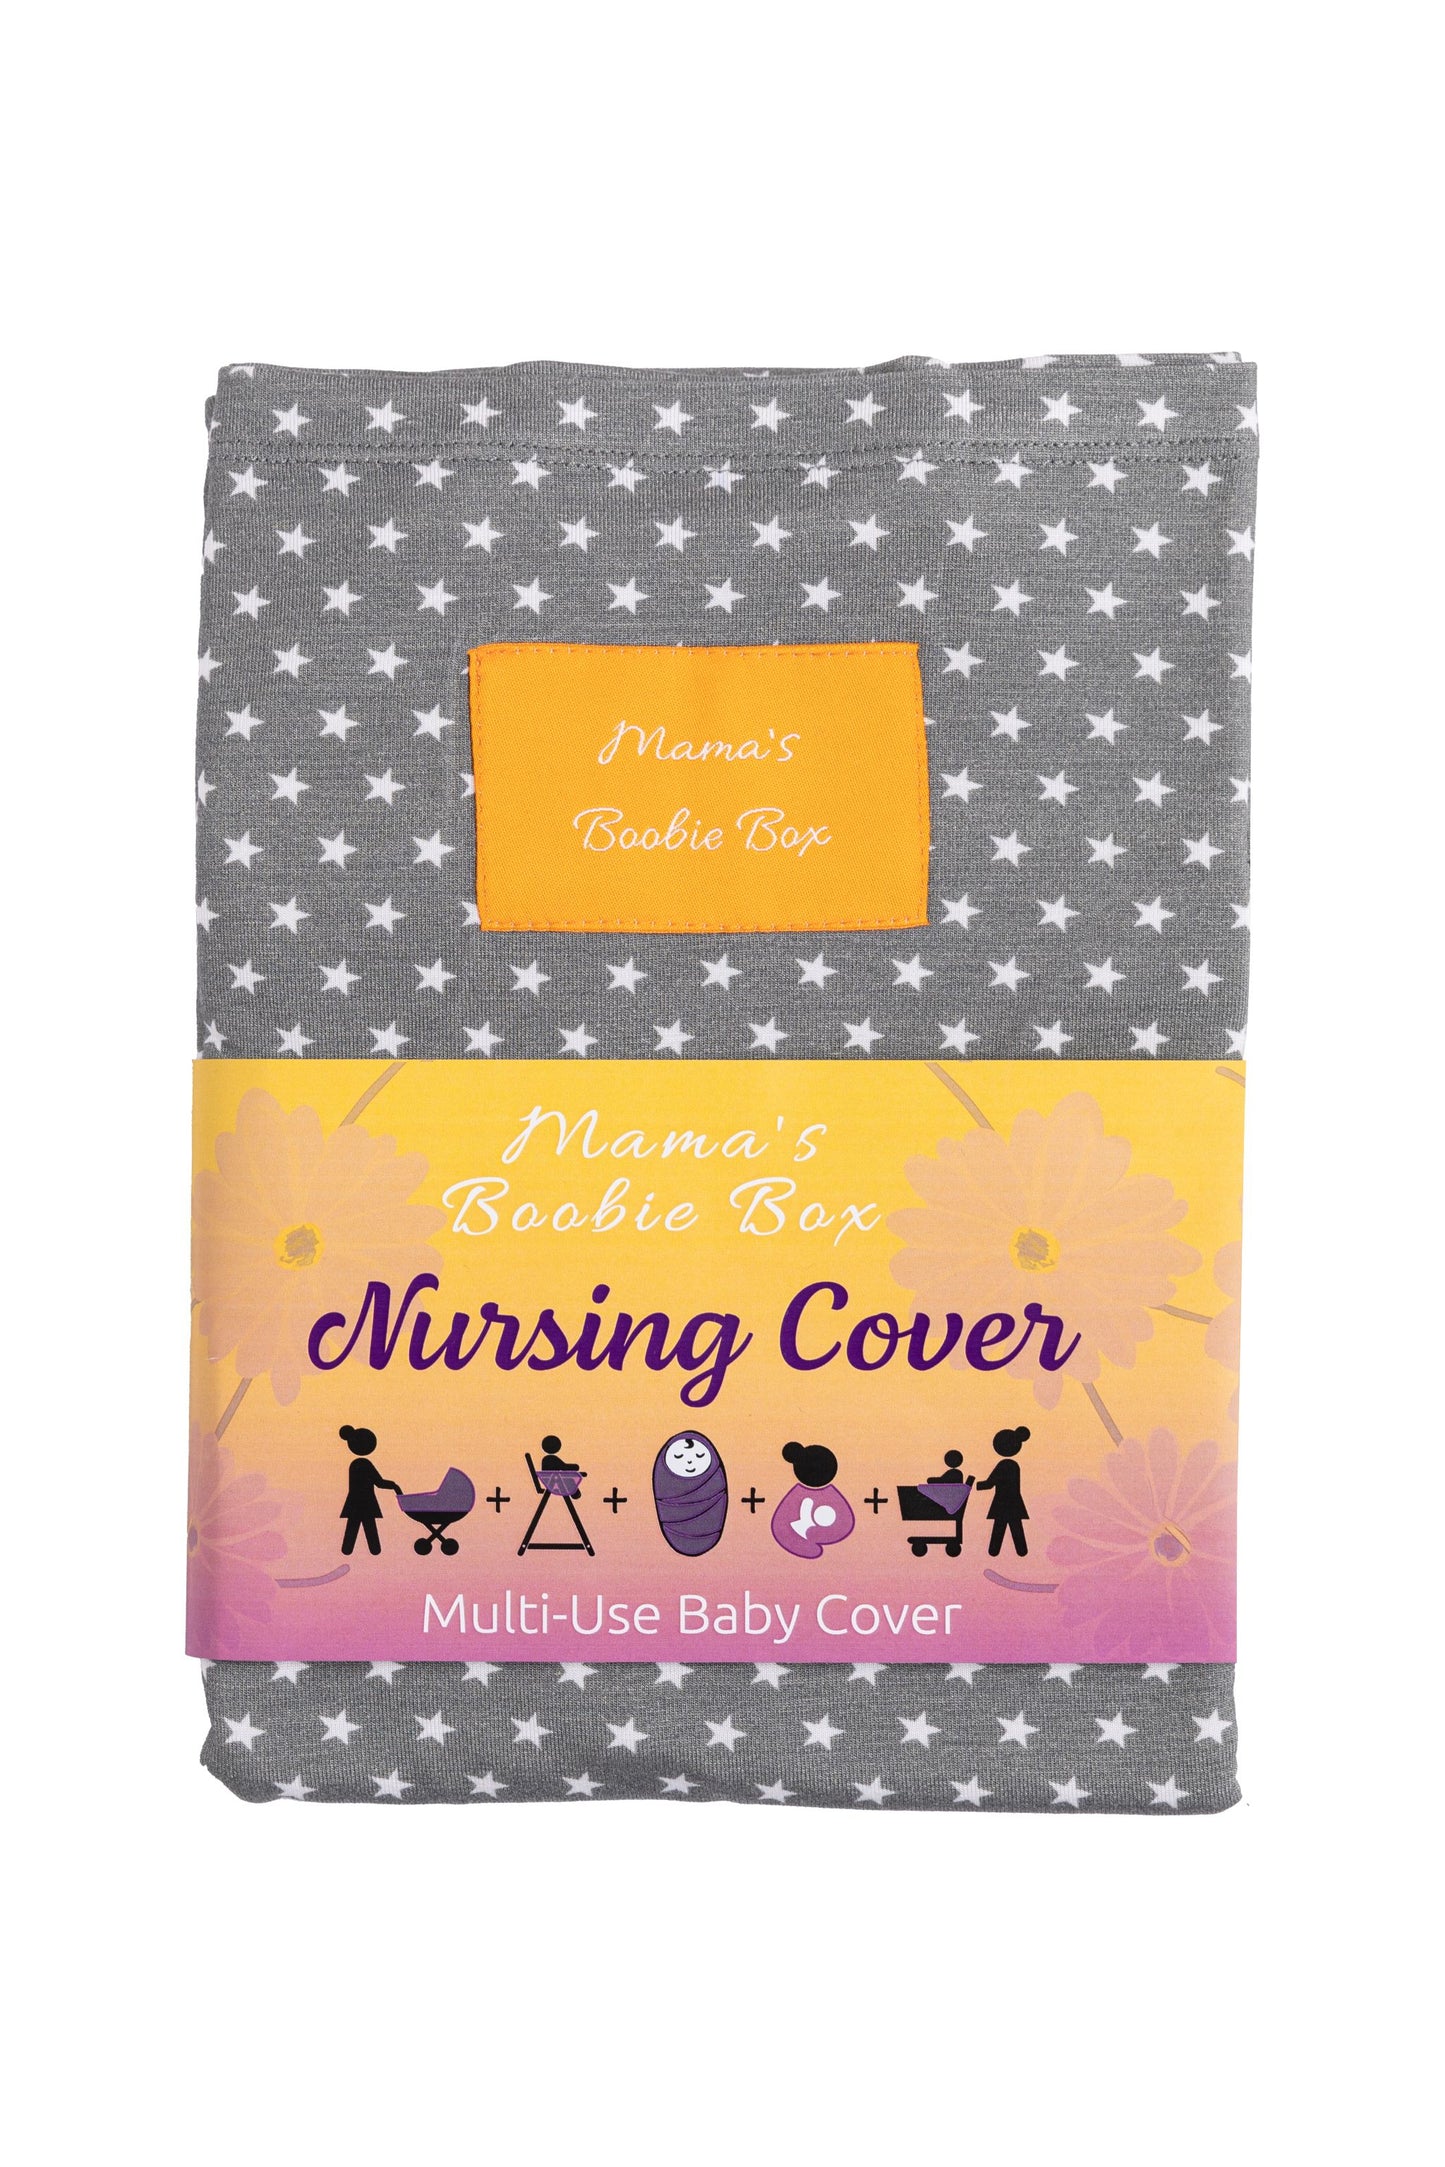 Nursing Cover by Mama's Boobie Box